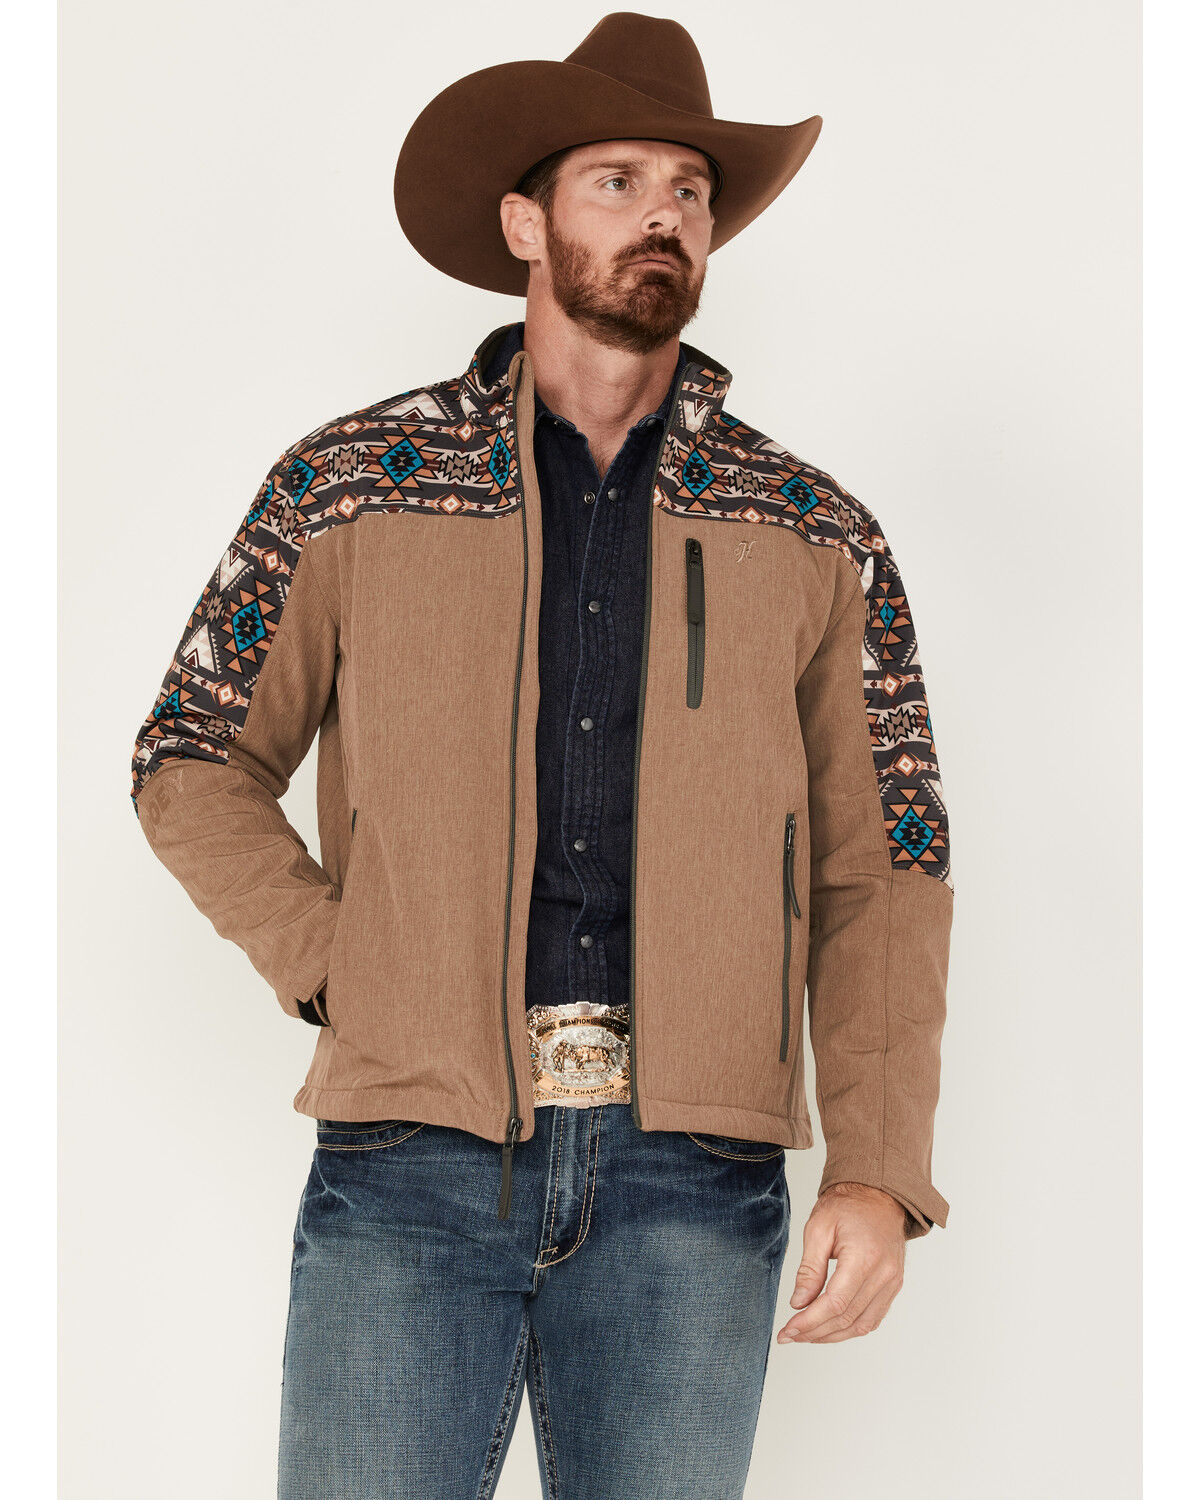 NoName vest MEN FASHION Jackets Print discount 68% Brown/Multicolored M 